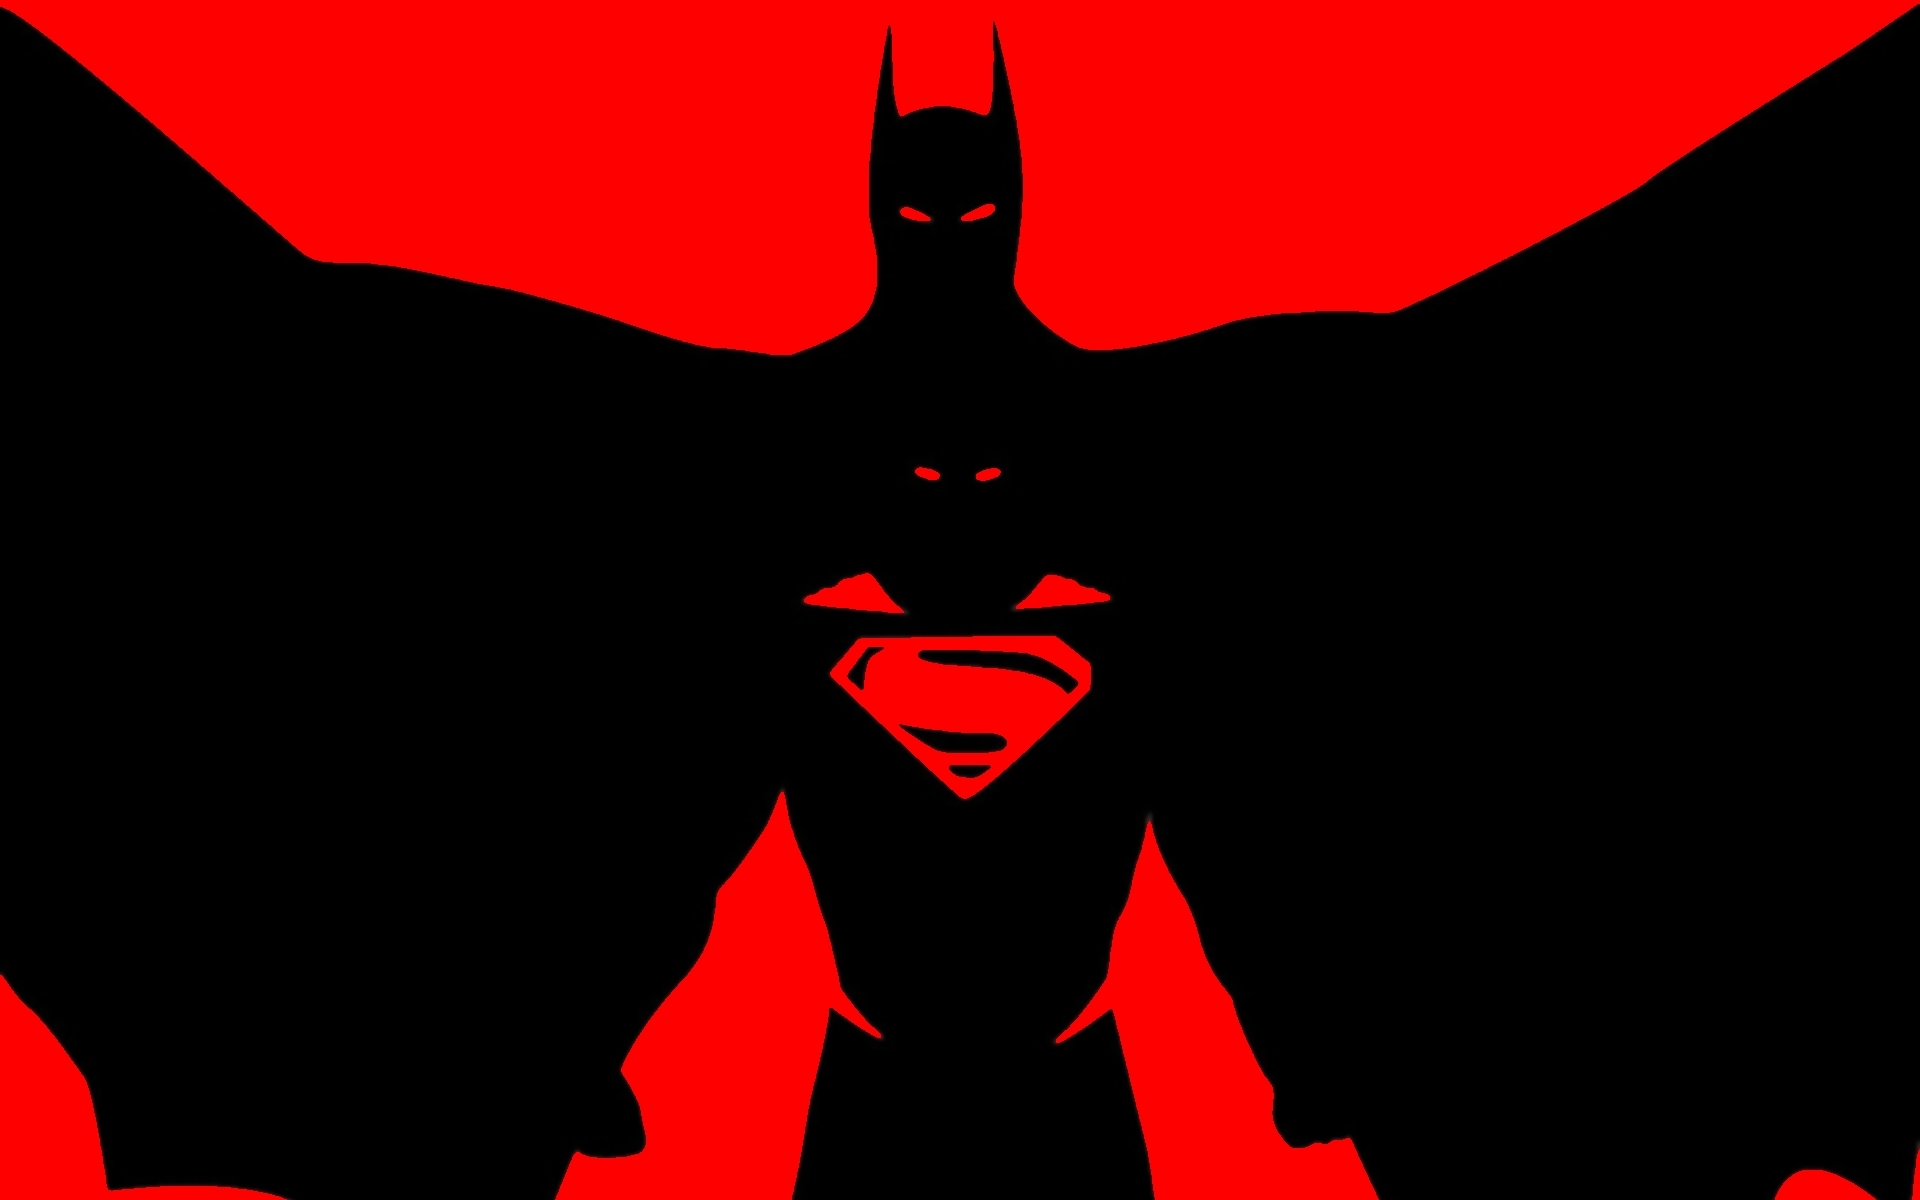 Batman And Superman Wallpaper Background HD Download Free ...